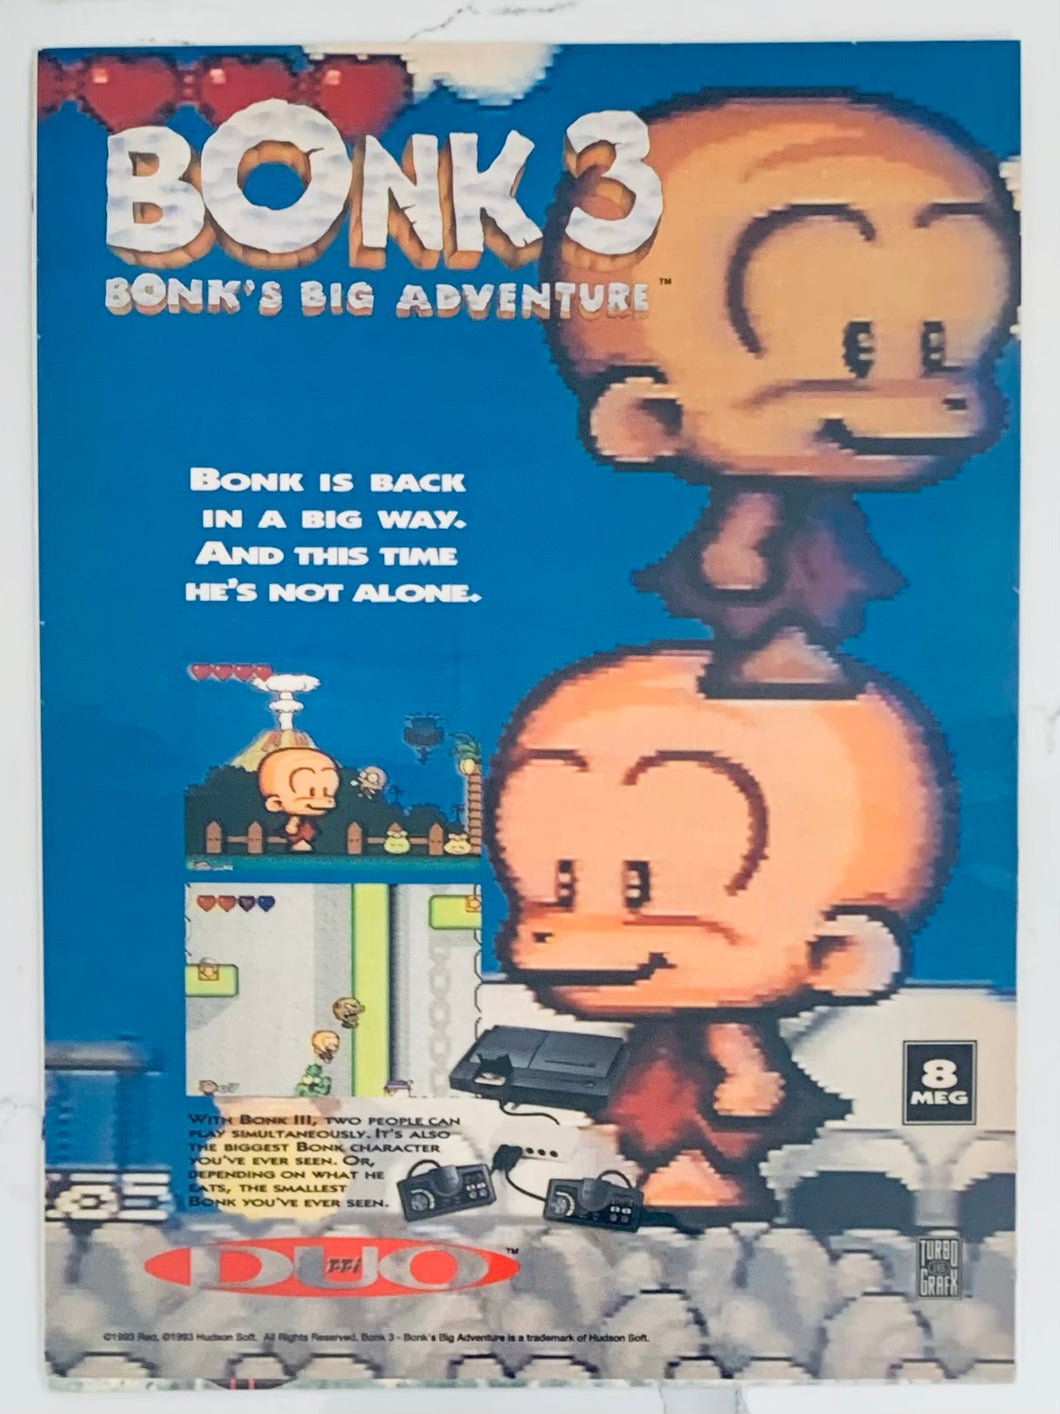 Bonk 3: Bonk’s Big Adventure - TurboDuo - Original Vintage Advertisement - Print Ads - Laminated A4 Poster